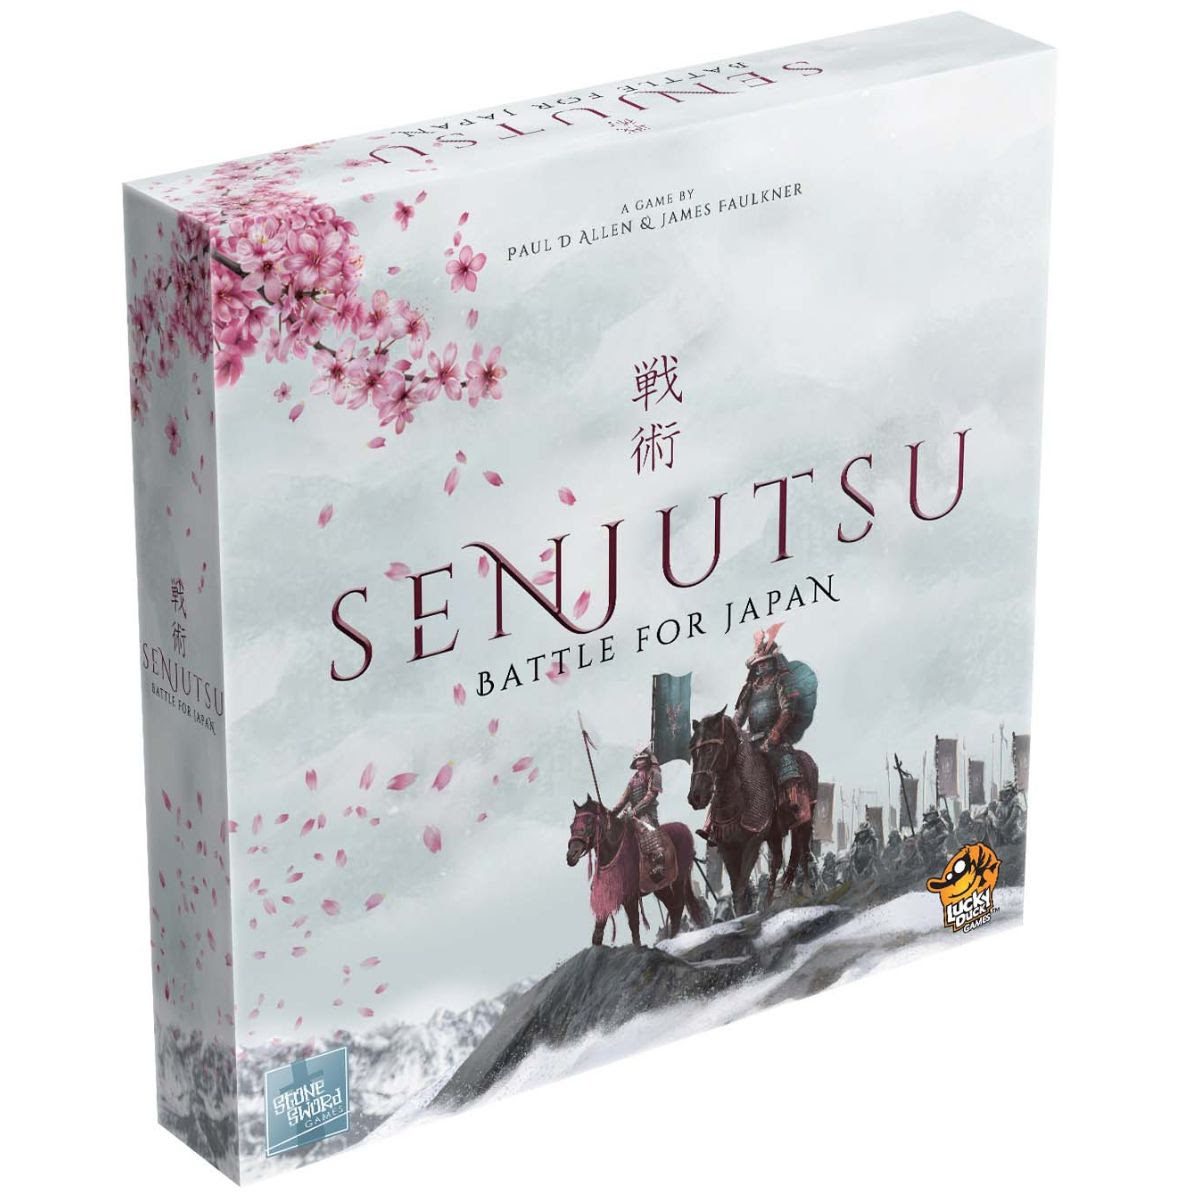  'Senjutsu: Battle For Japan' box